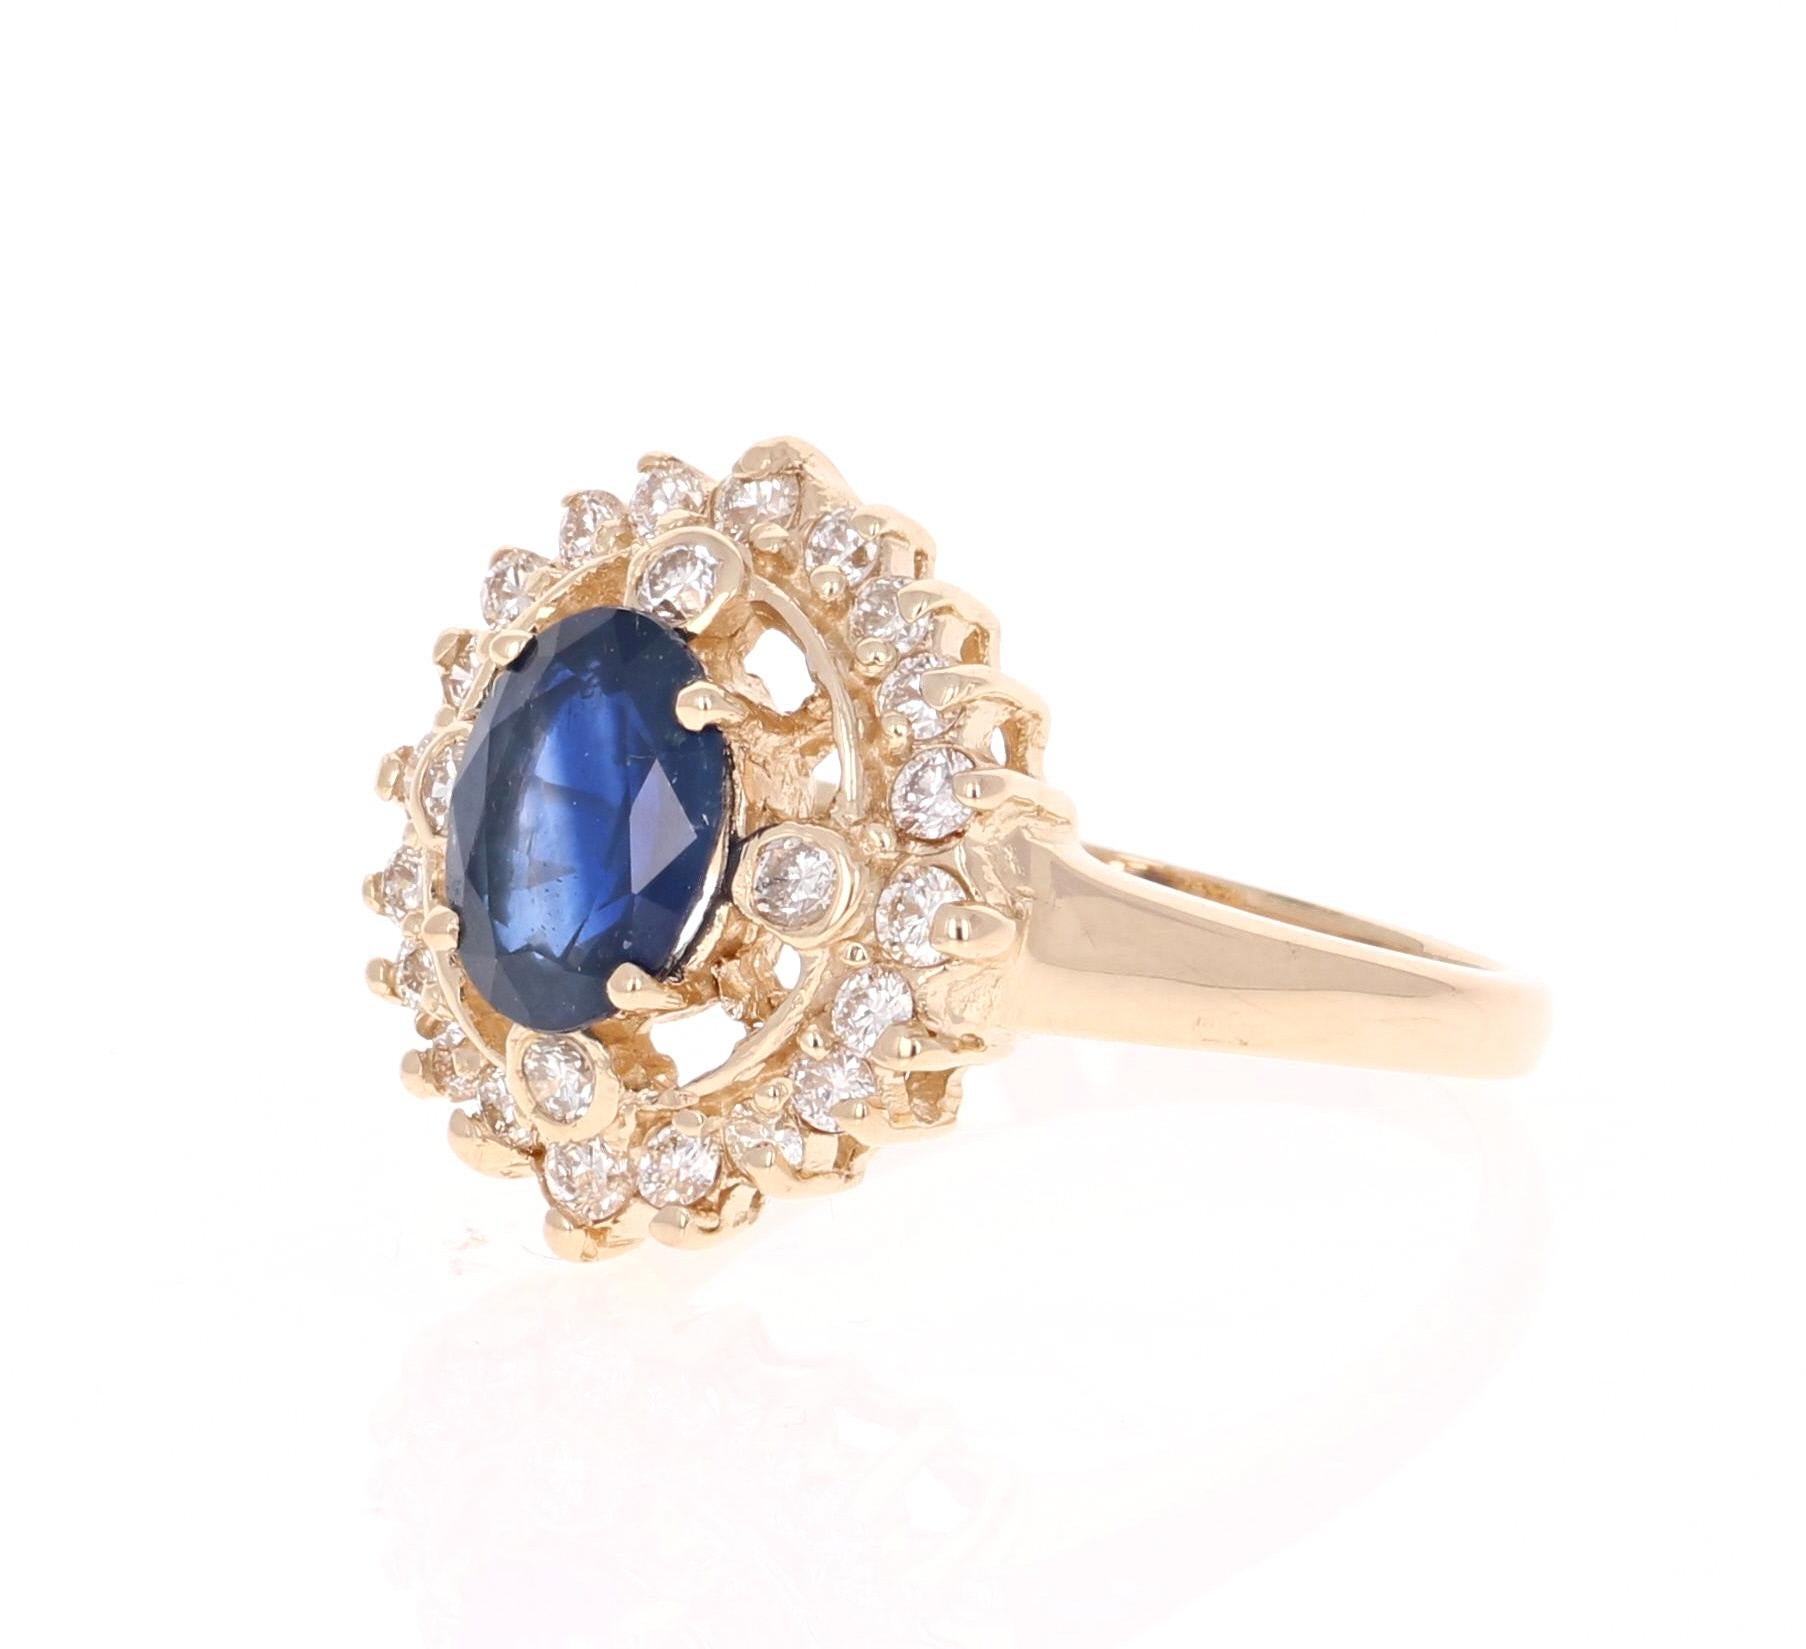 Oval Cut 1.87 Carat Sapphire Diamond Art Deco 14 Karat Yellow Gold Ring